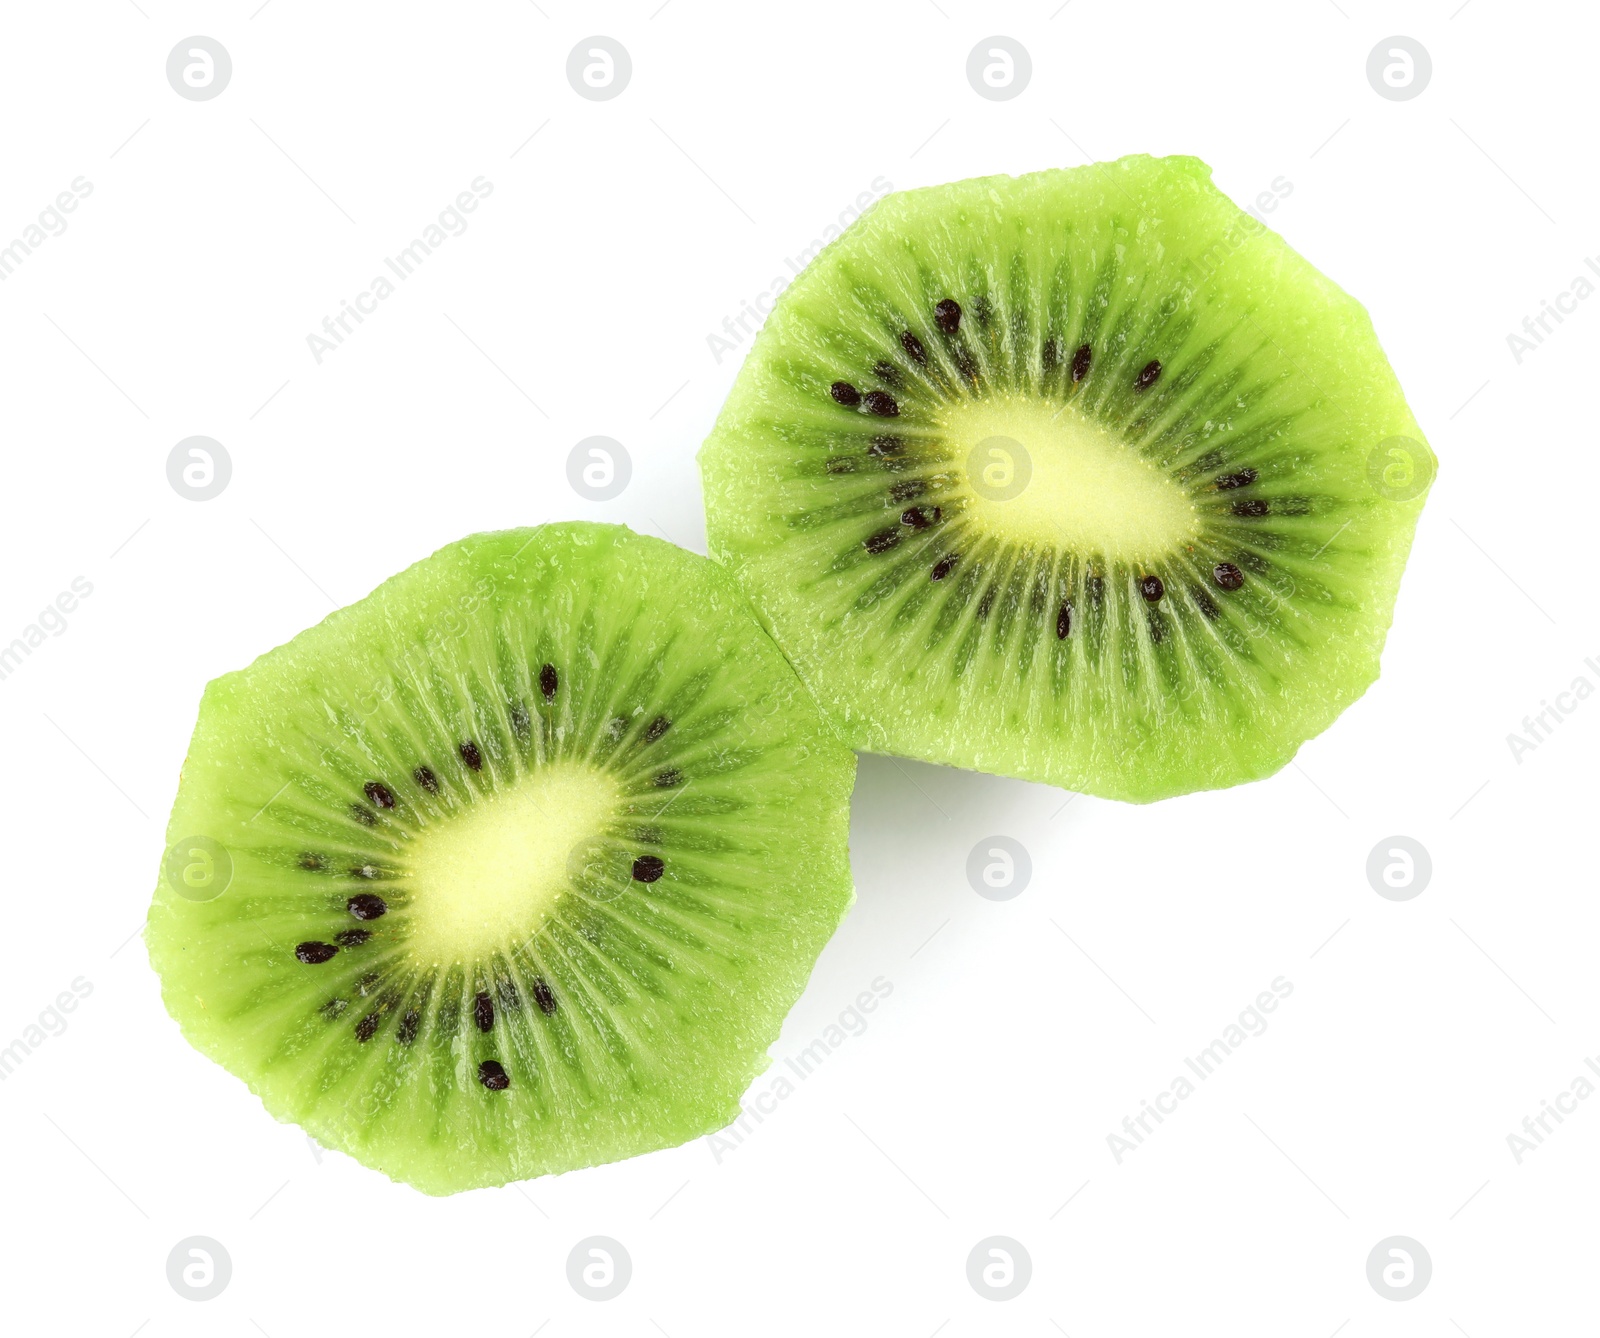 Photo of Cut fresh peeled kiwi on white background, top view